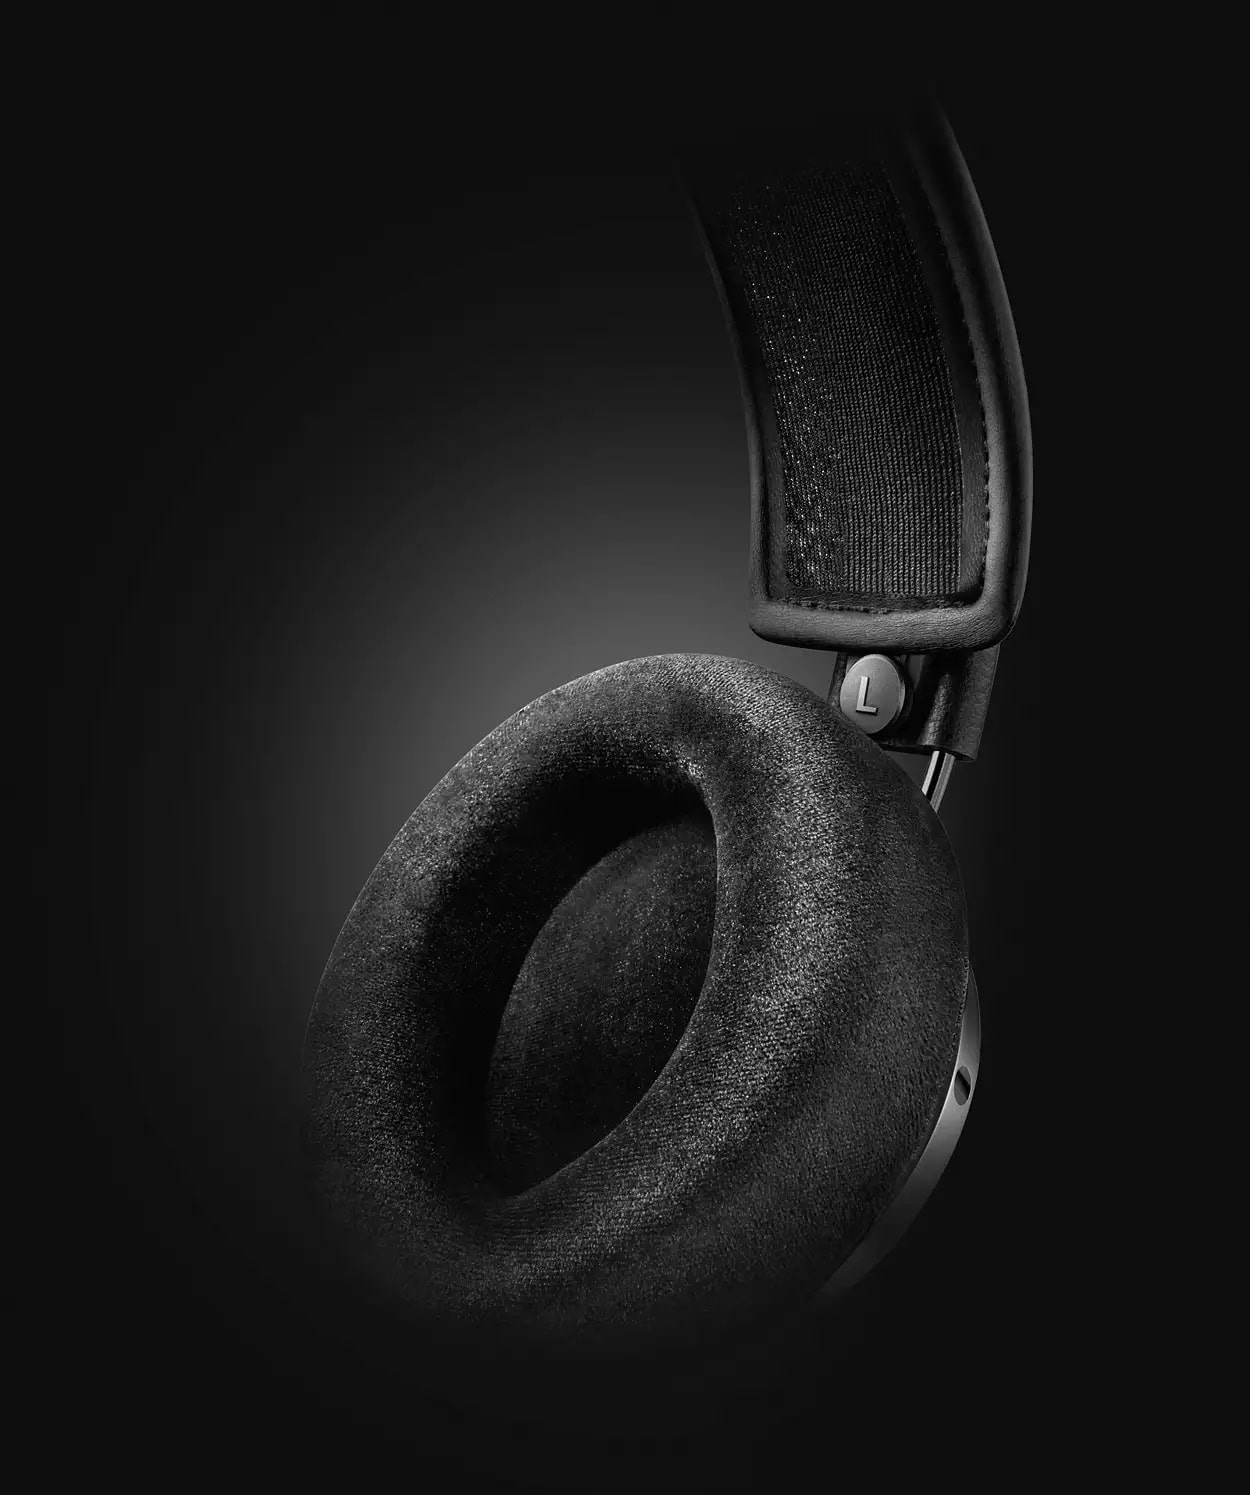 Comfortable test of Philips Audio Fidelio X2HR headphones